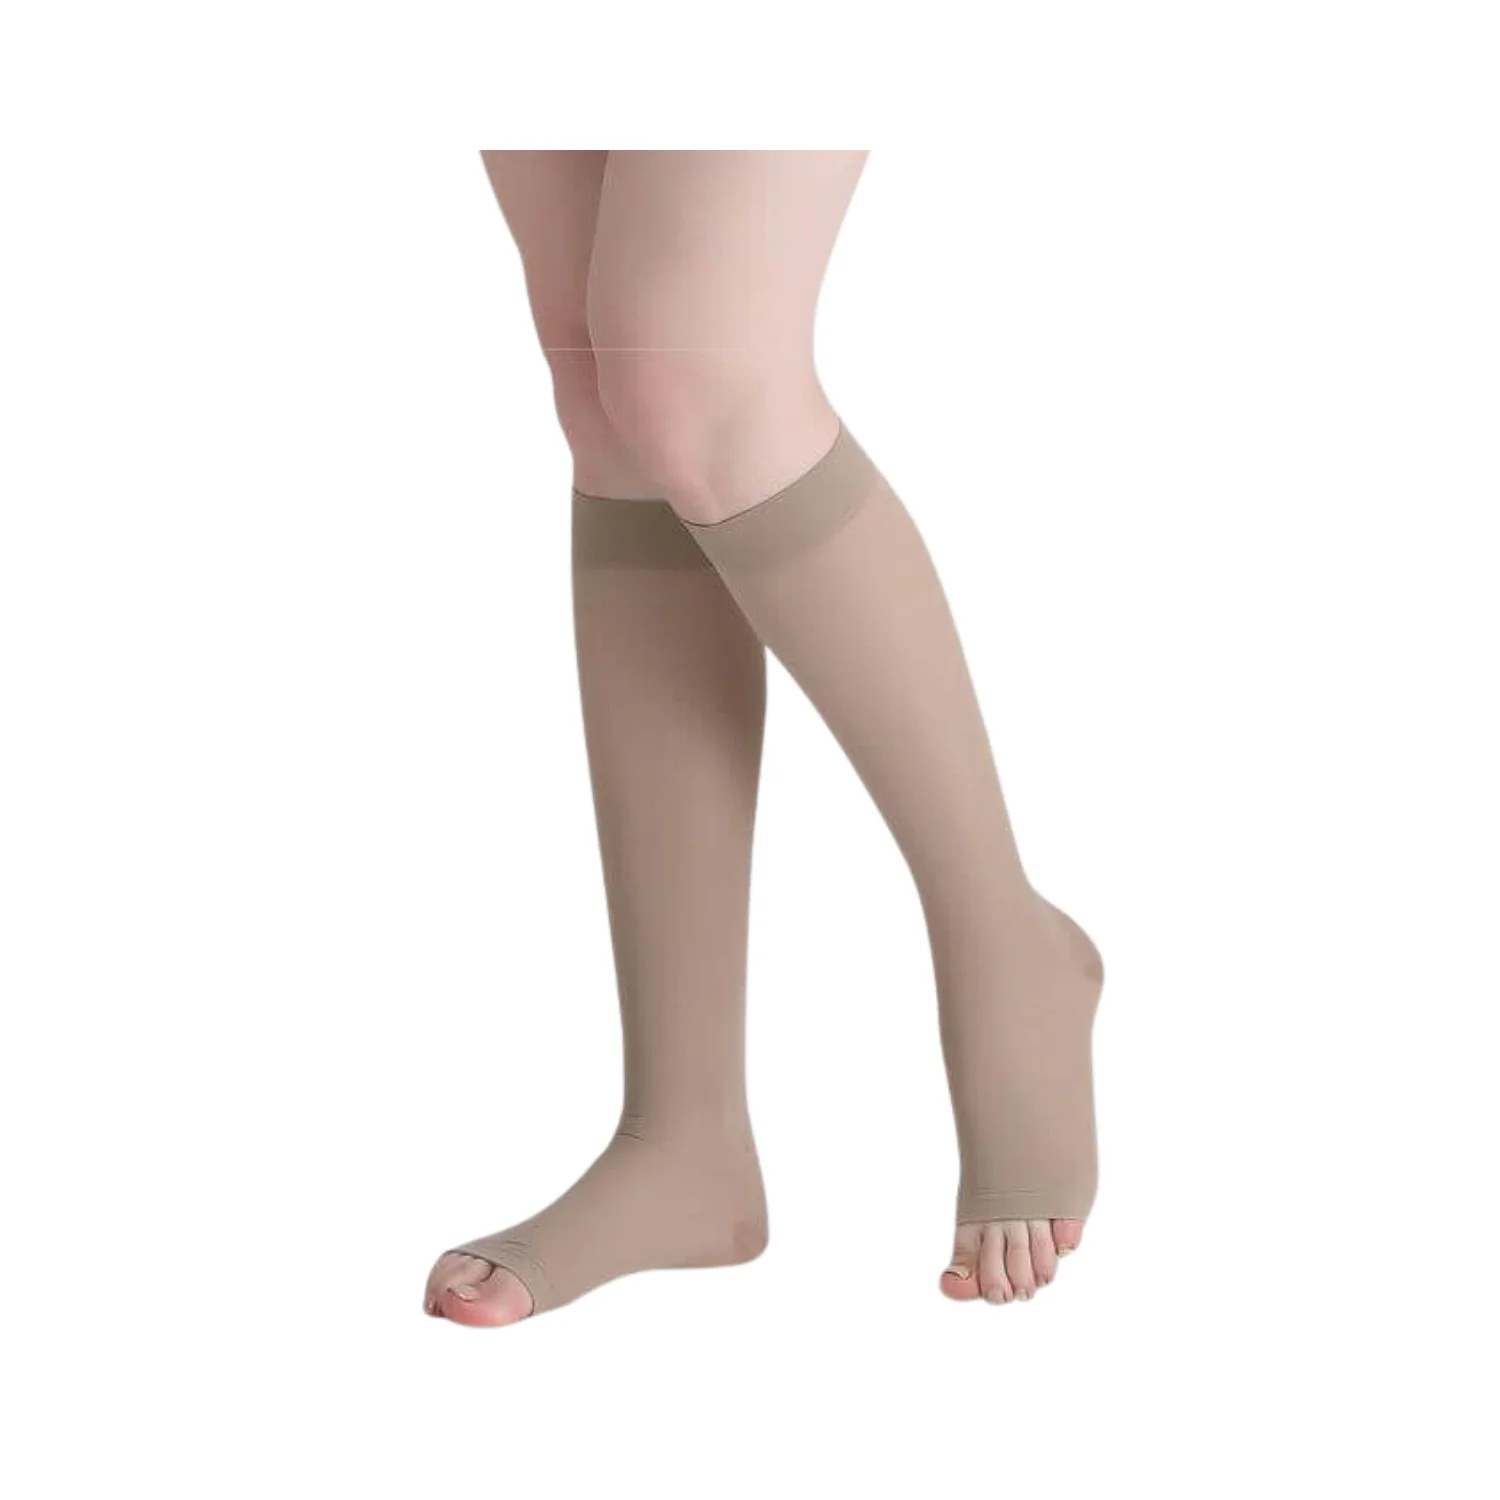 Flamingo below knee compression stockings Prophylactic Pair OC2236